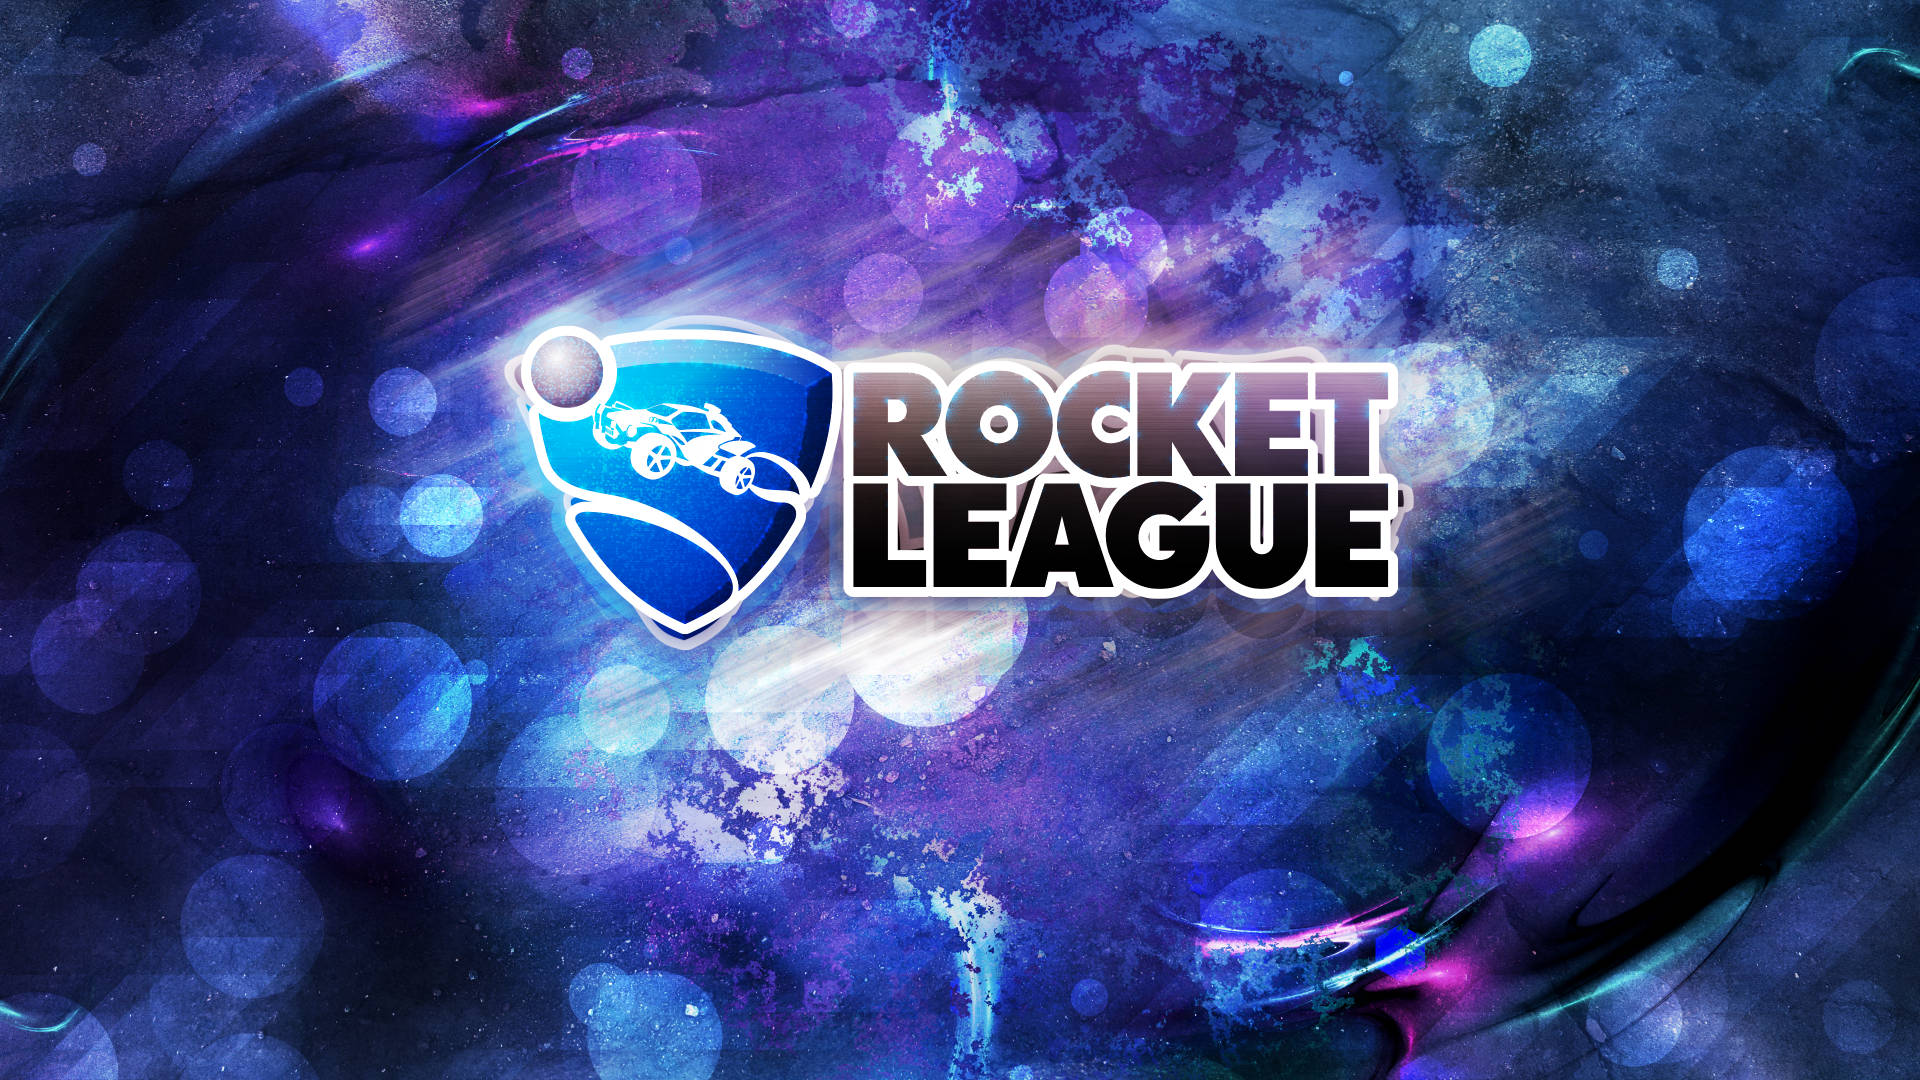 Rocket League Sticker 1920x1080 Background